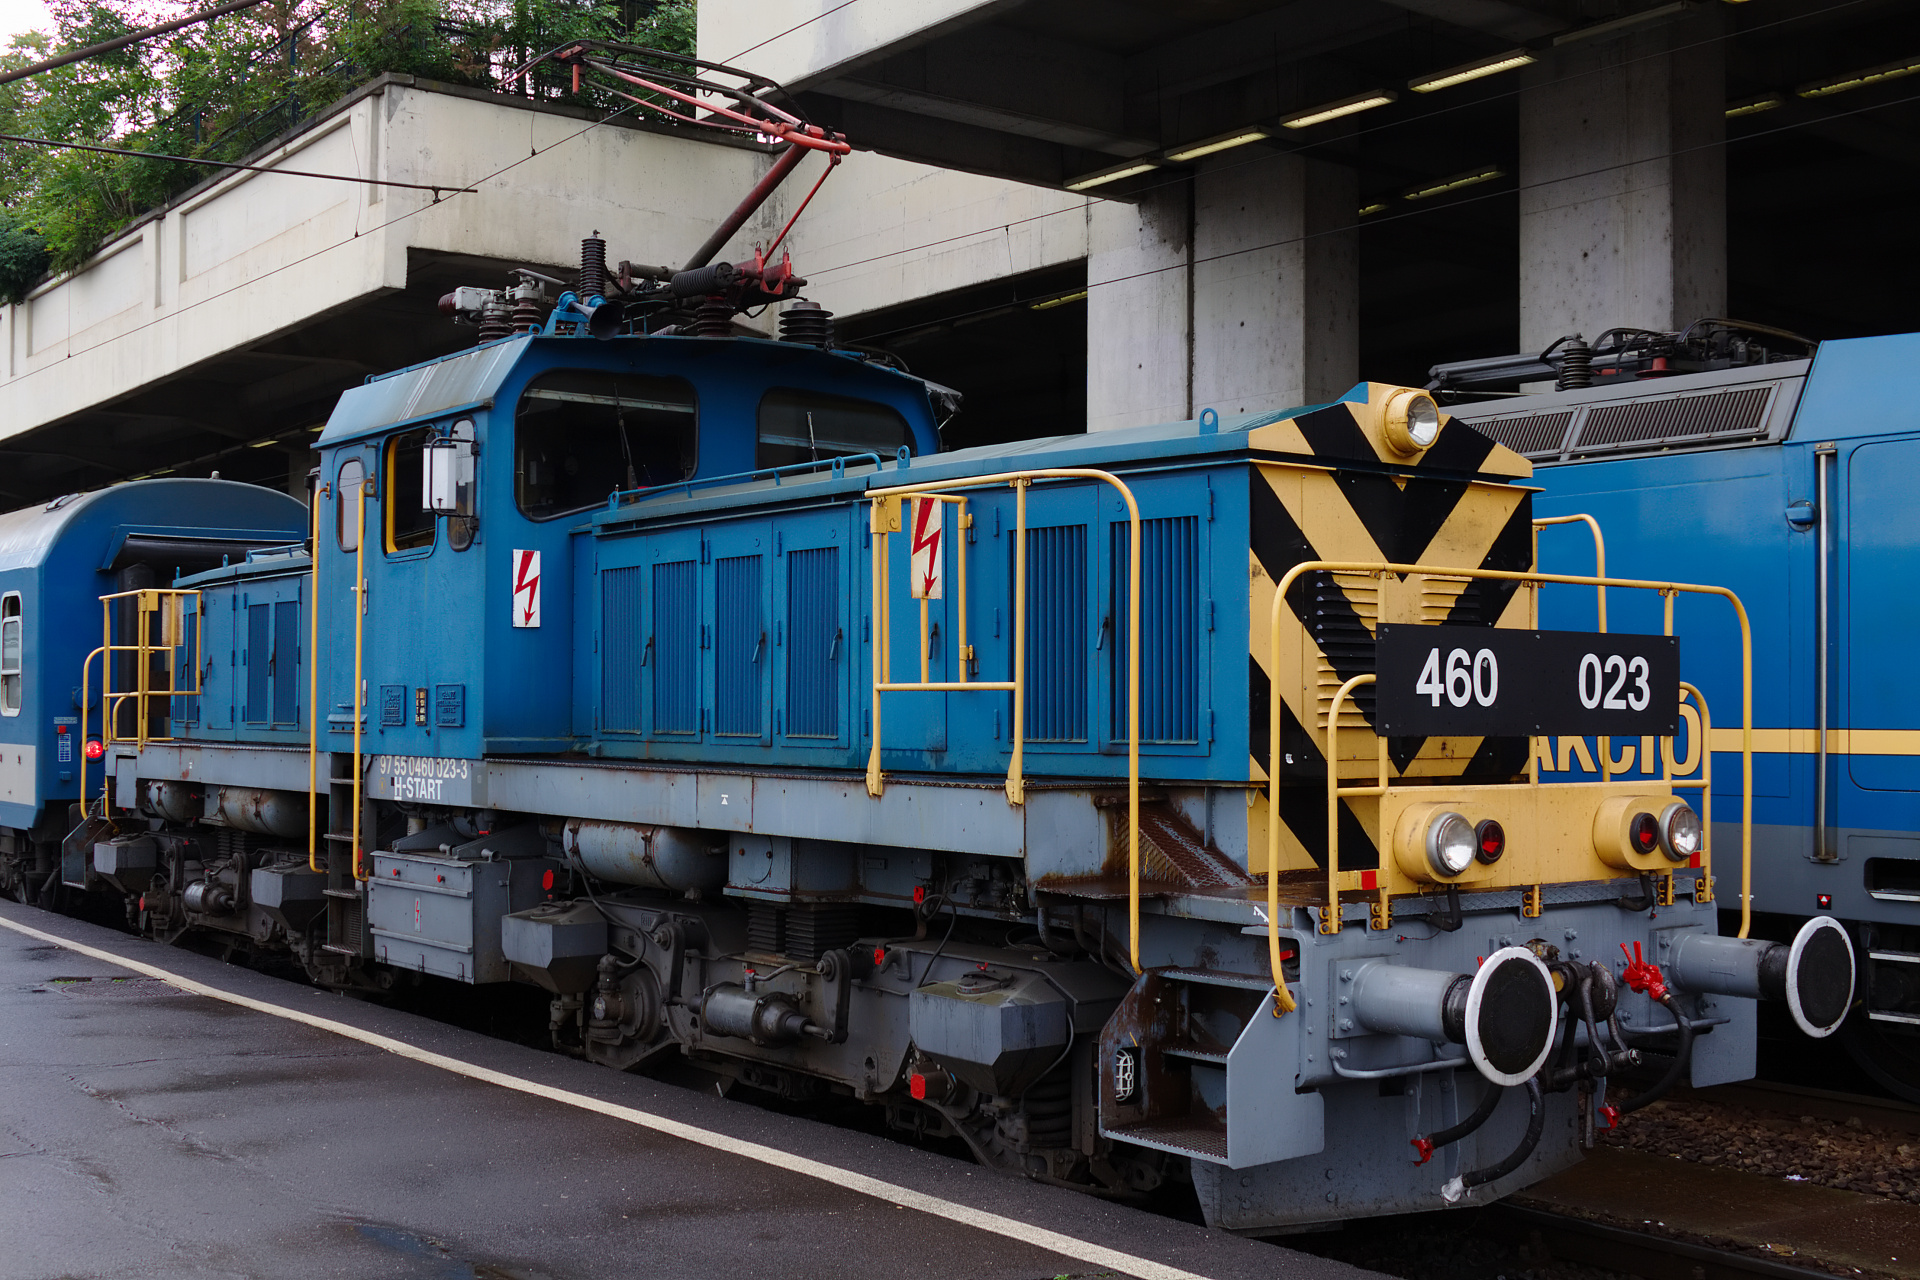 Ganz-MÁVAG VM16 V46 460 023 (Travels » Budapest » Vehicles » Trains and Locomotives)